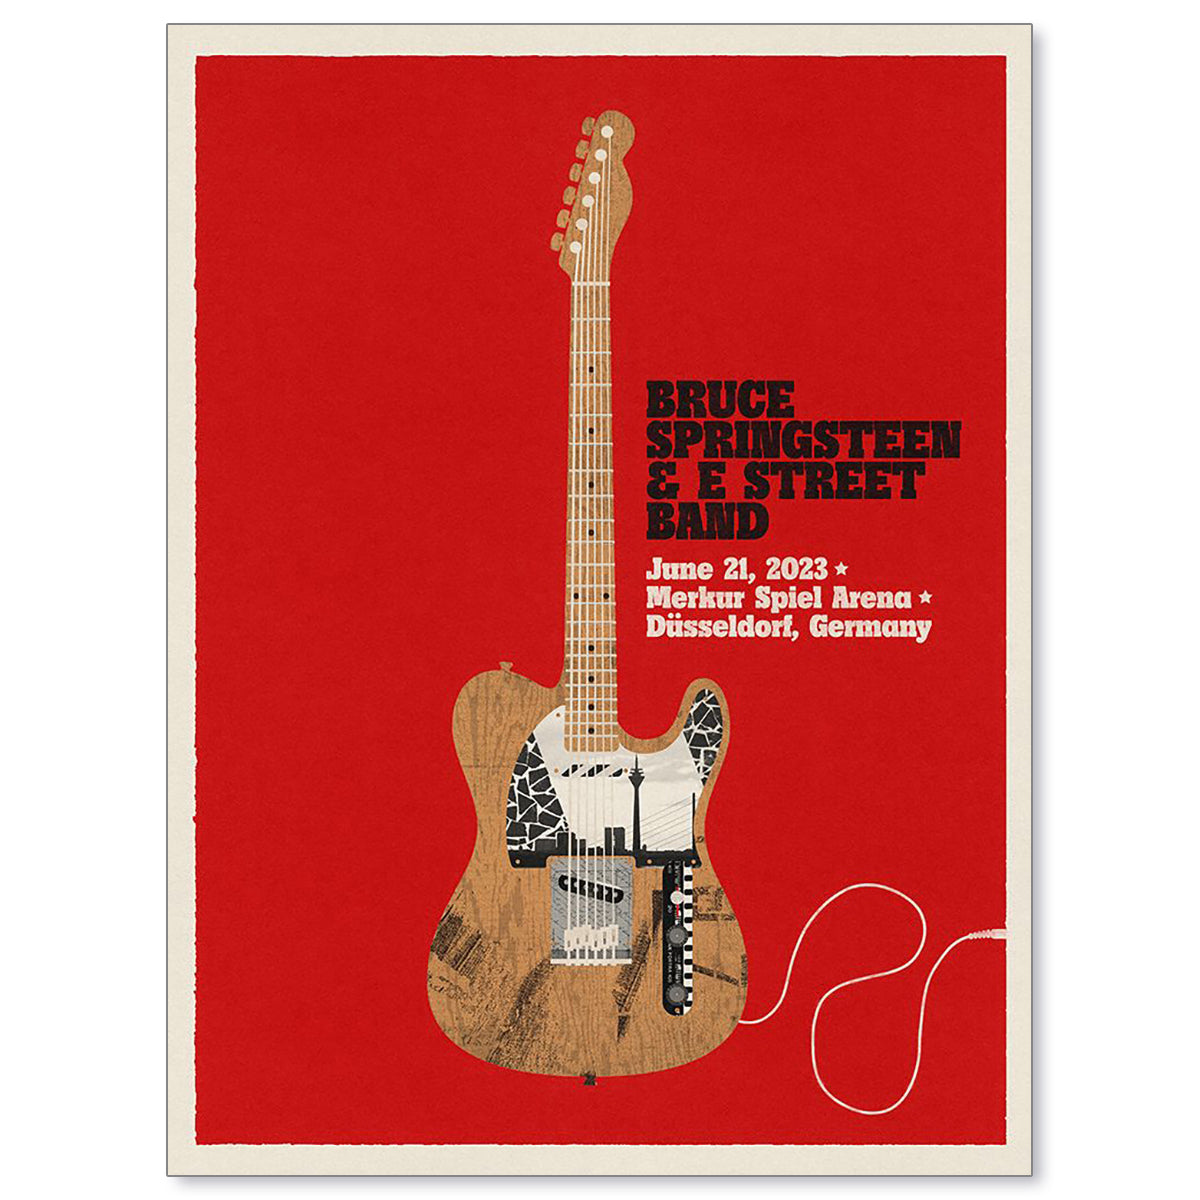 Bruce Springsteen & E Street Band Dusseldorf June 21, 2023